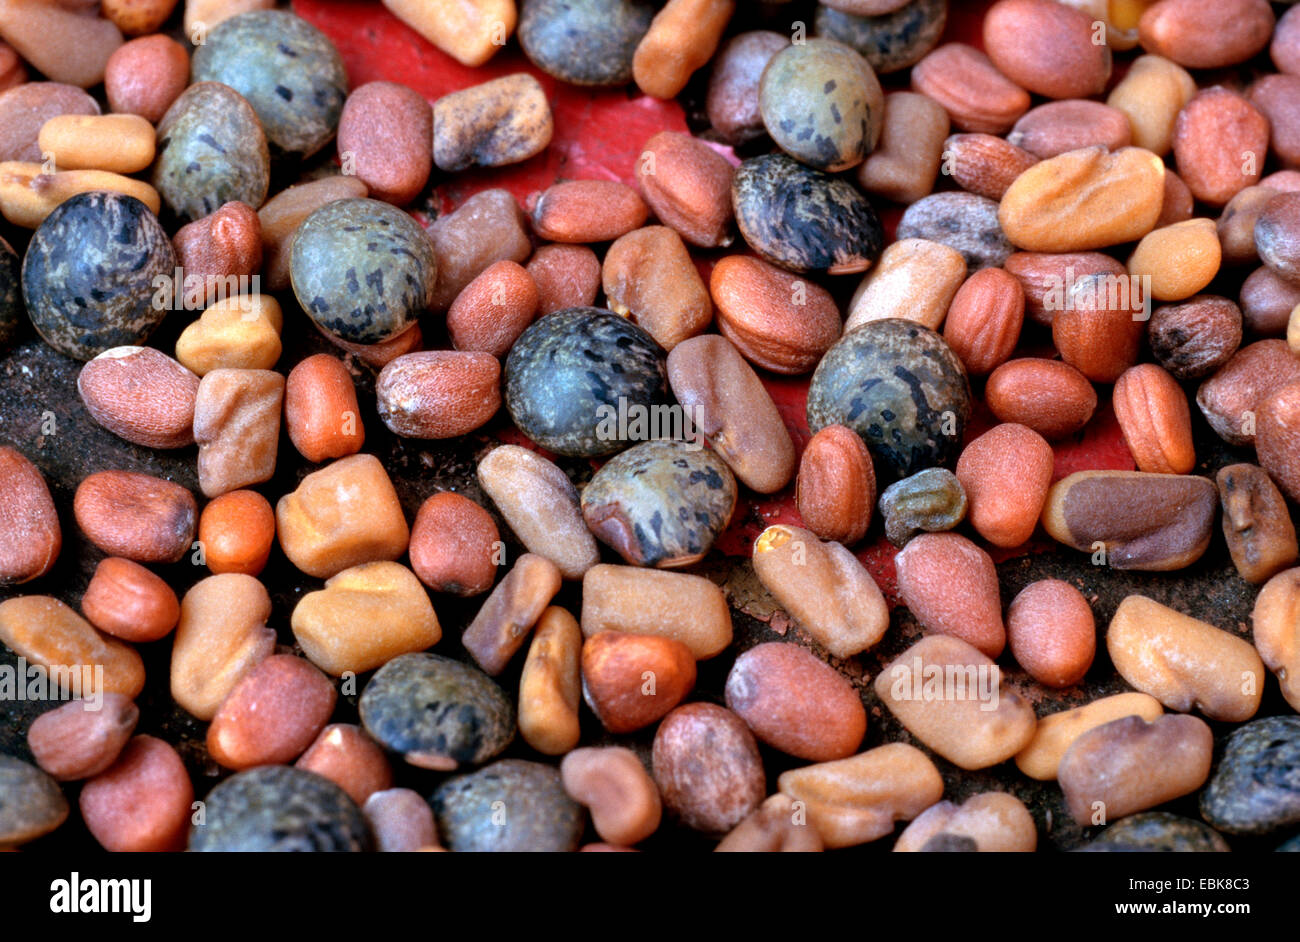 fenugreek (Trigonella foenum-graecum), seeds of fenugreek, lentils and radish Stock Photo